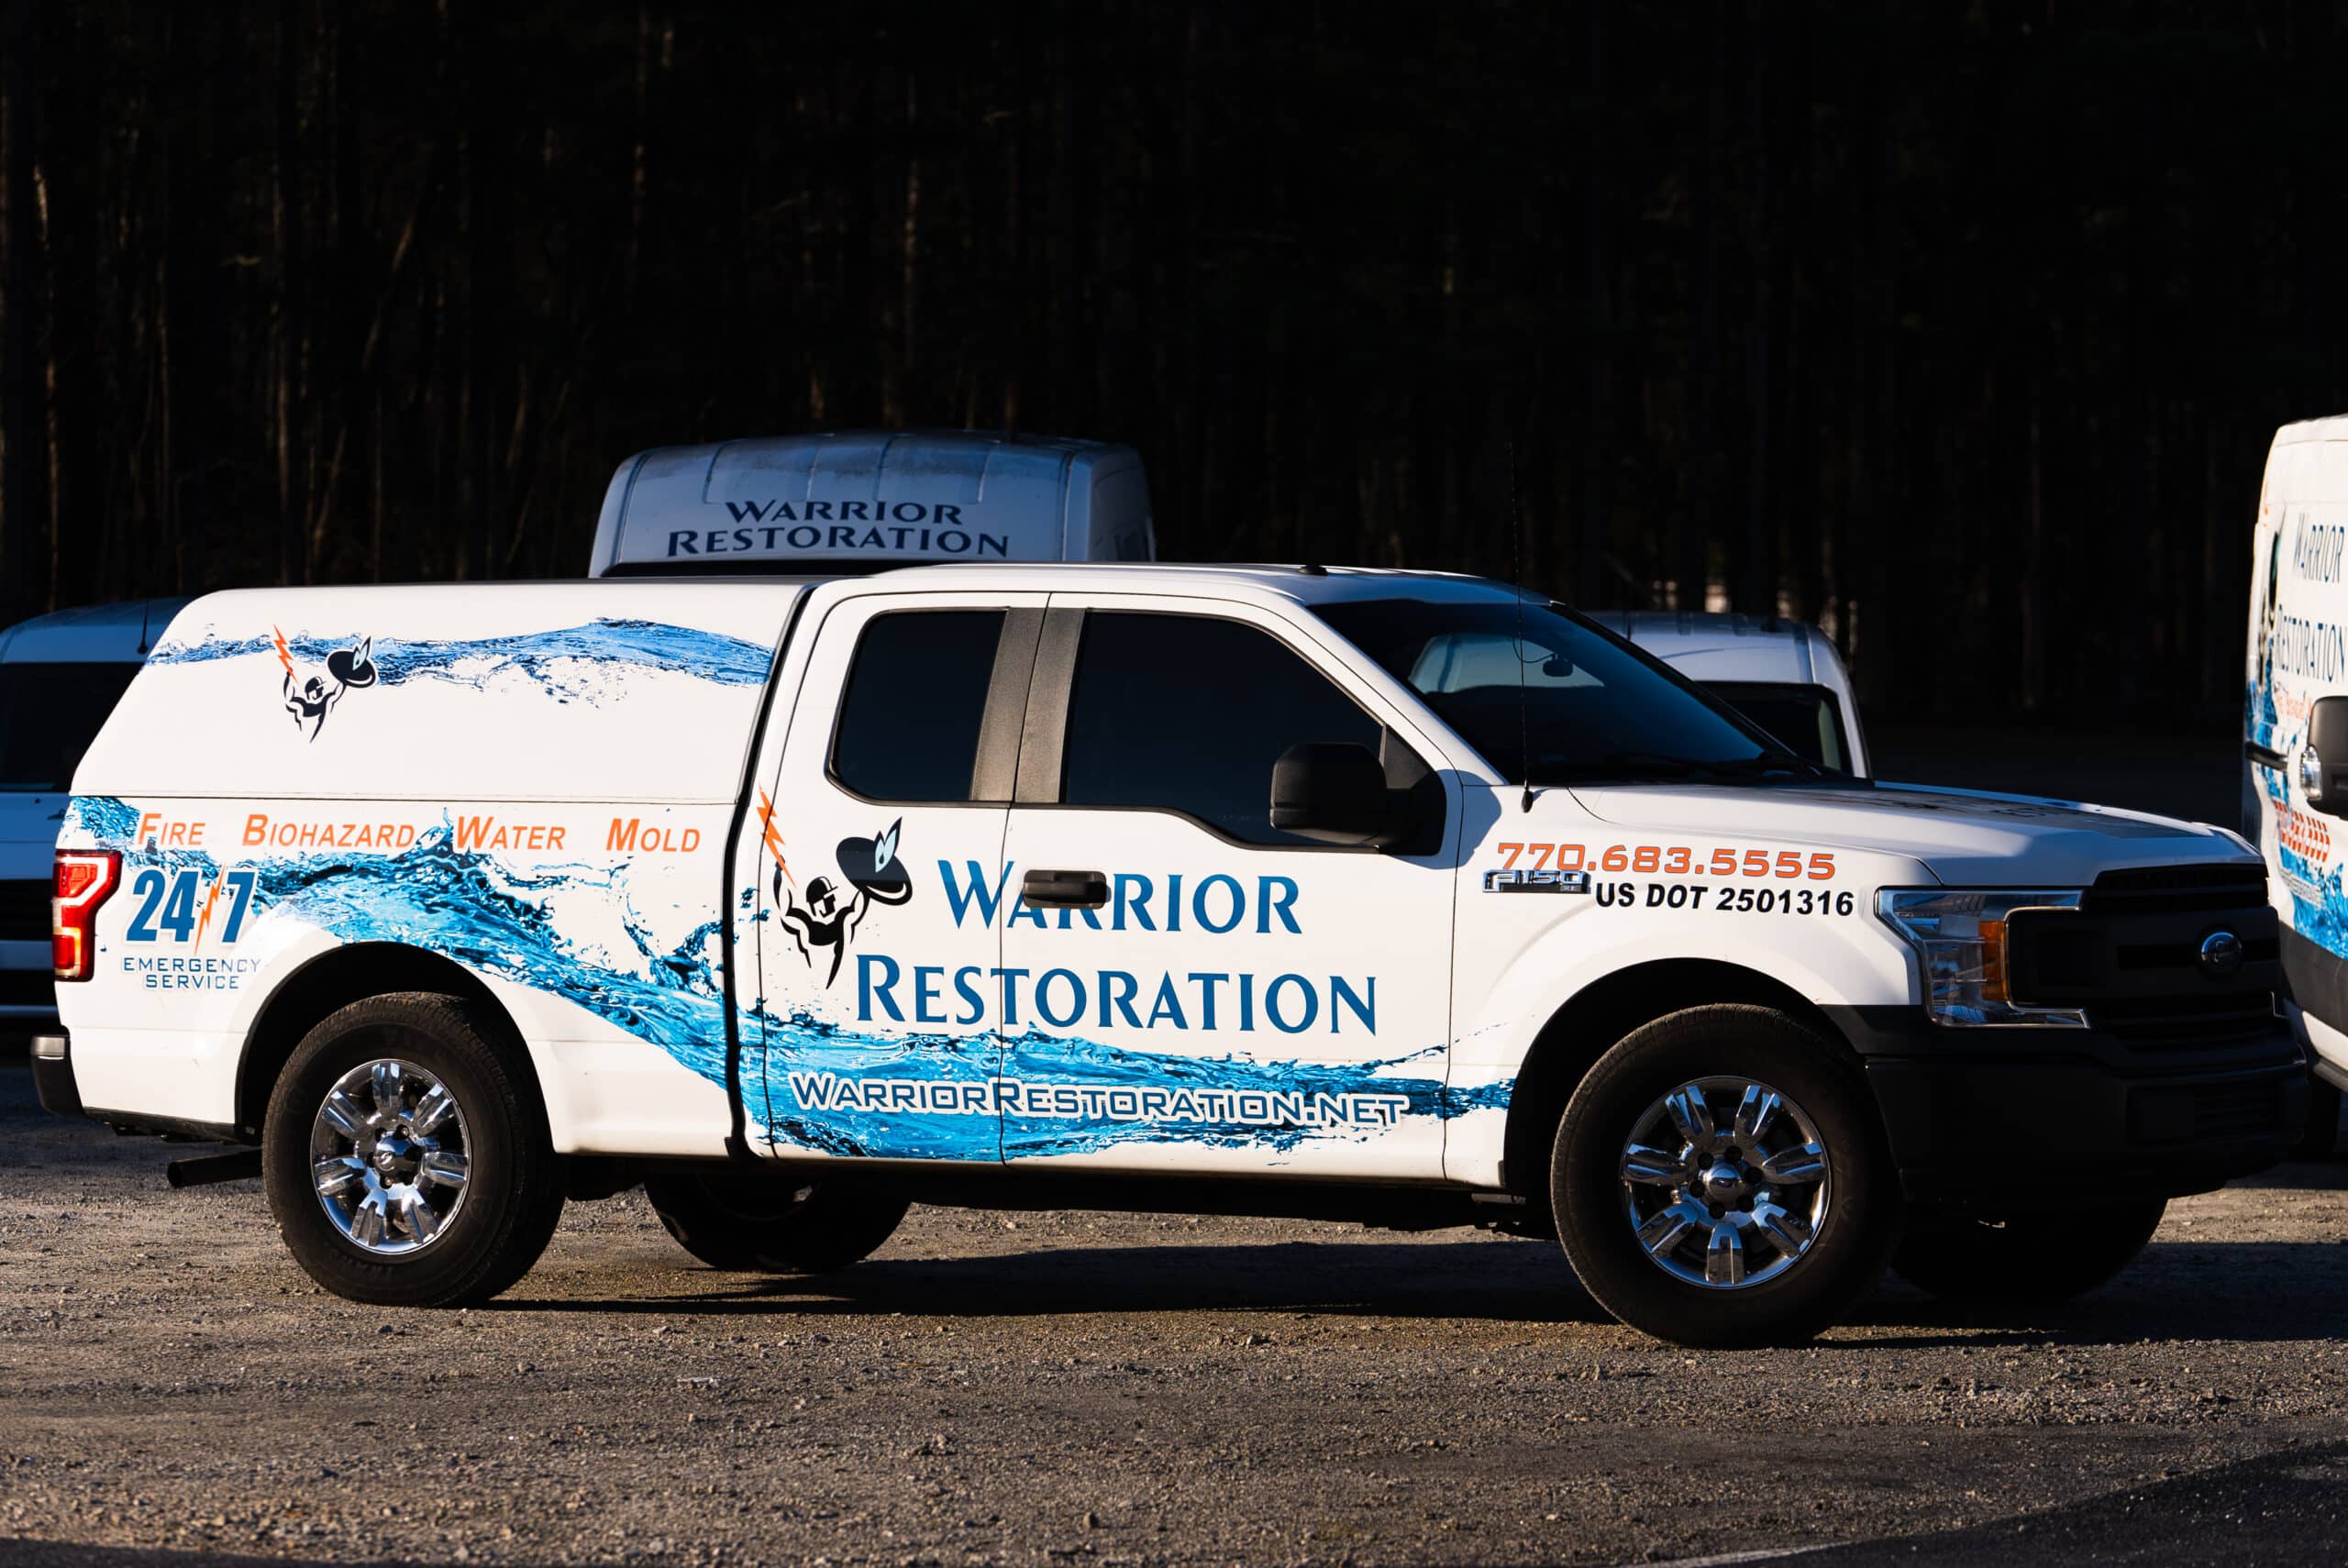 Warrior Restoration - Expert Residential & Commercial Restoration Services Newnan GA